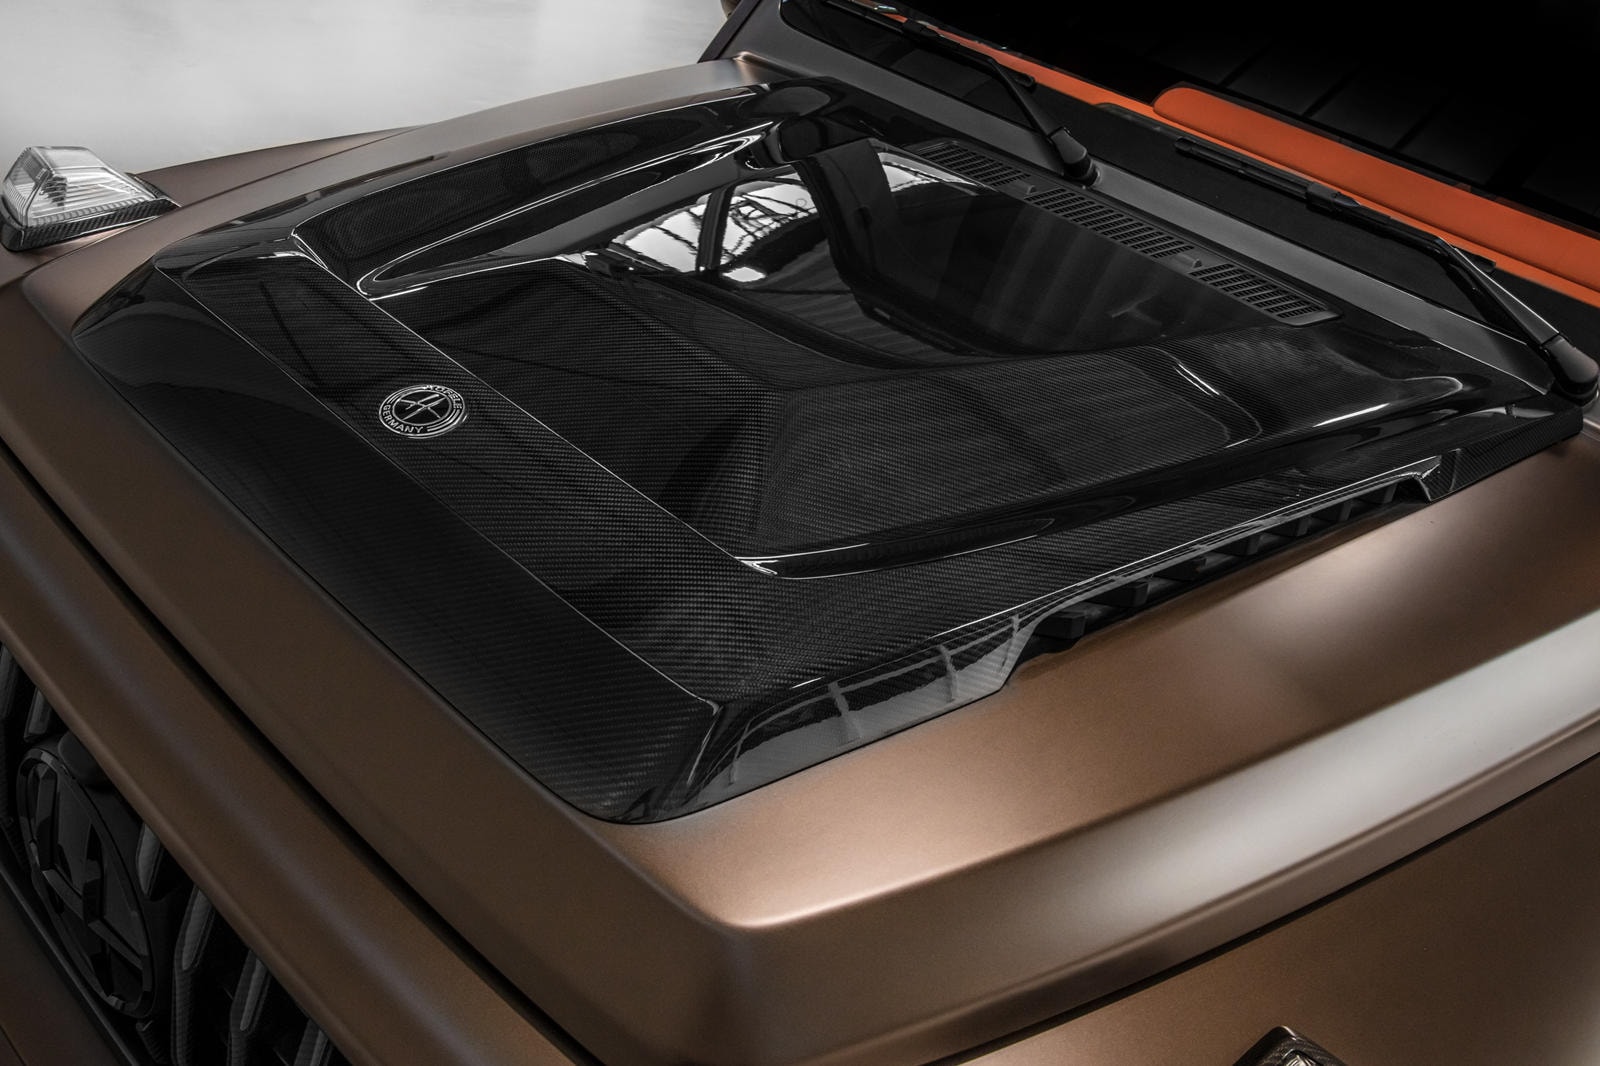 HOFELE 發表全新 Mercedes-AMG G63 定製車漆碳纖維改裝車型